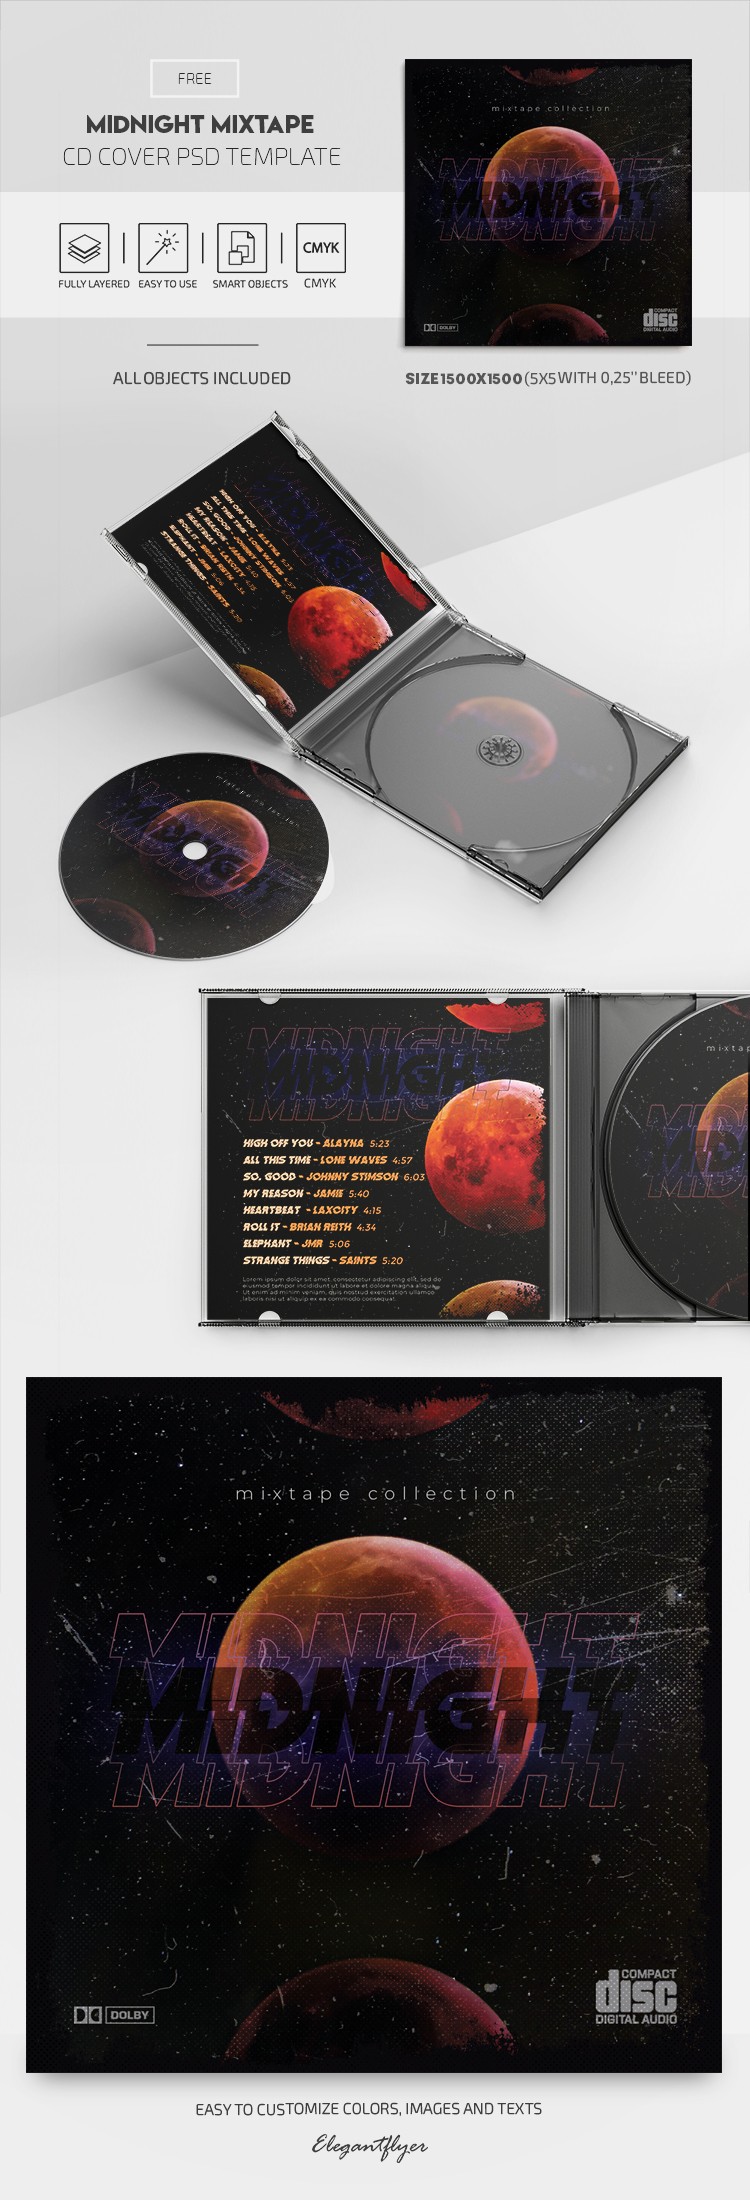 Mitternachts Mixtape CD Cover by ElegantFlyer